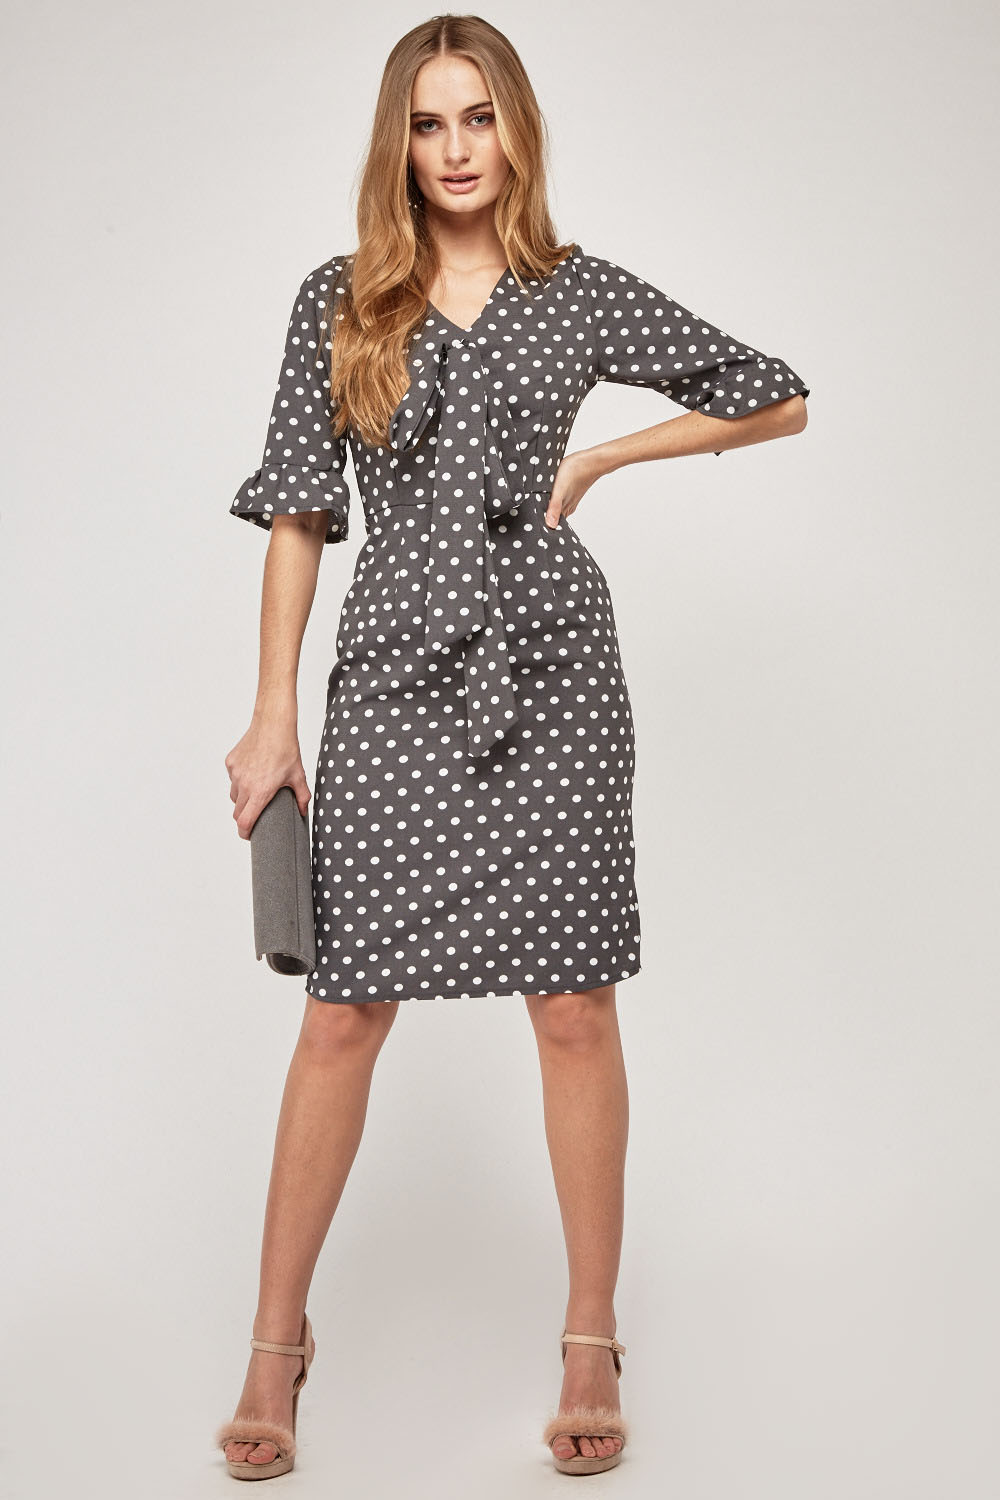 grey dress with white polka dots